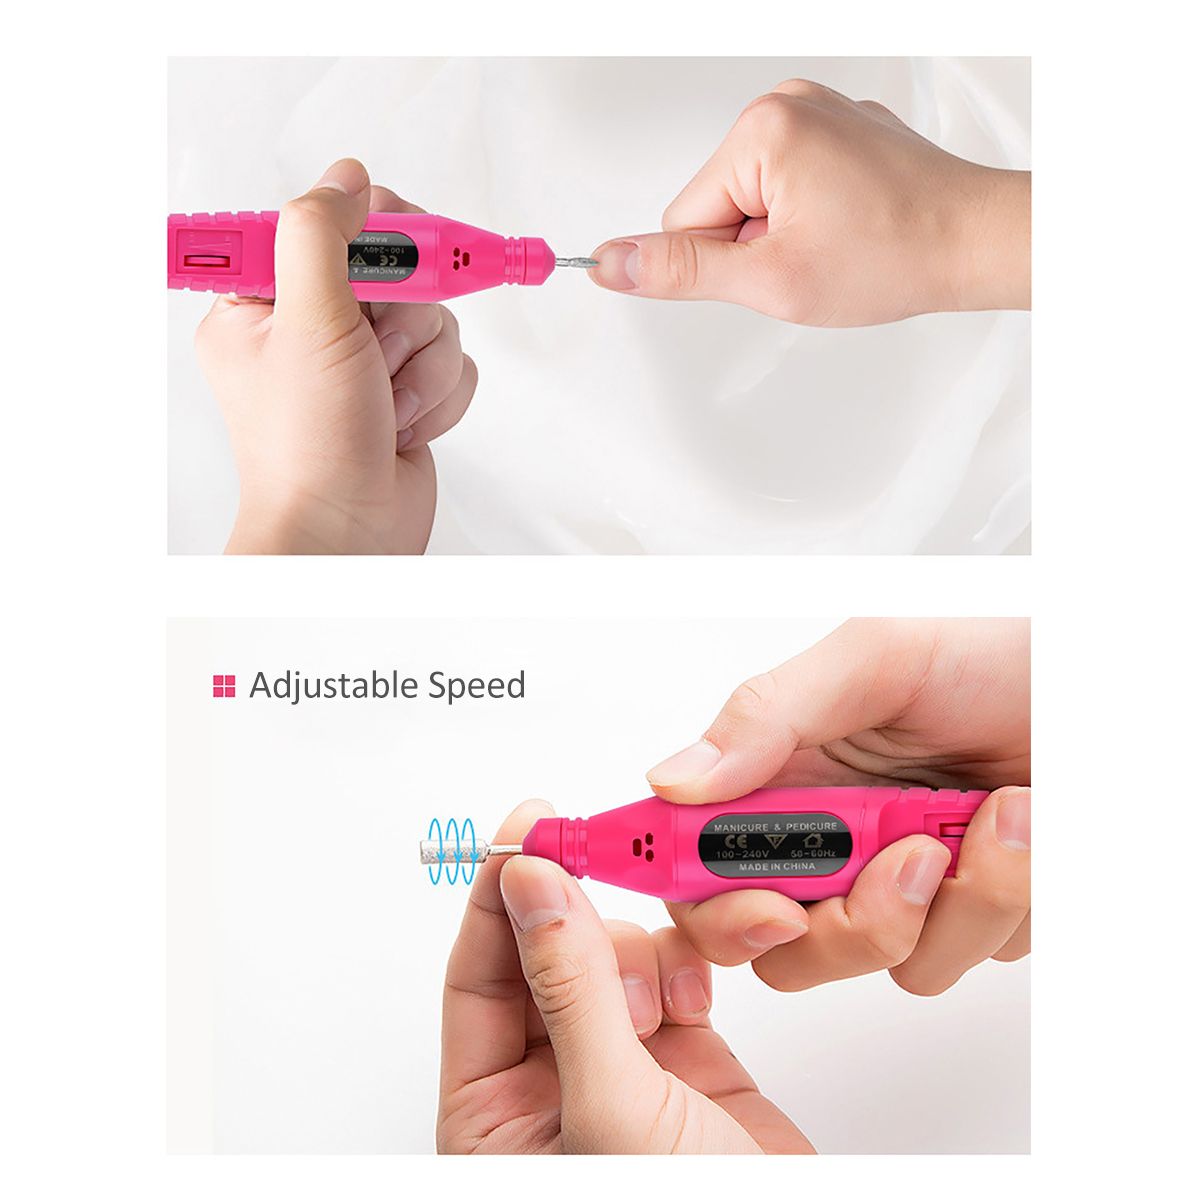 Mini-Portable-Nail-Drill-Machine-Manicure-Pedicure-Polishing-Tool-With-6-Drill-Bits-1678849